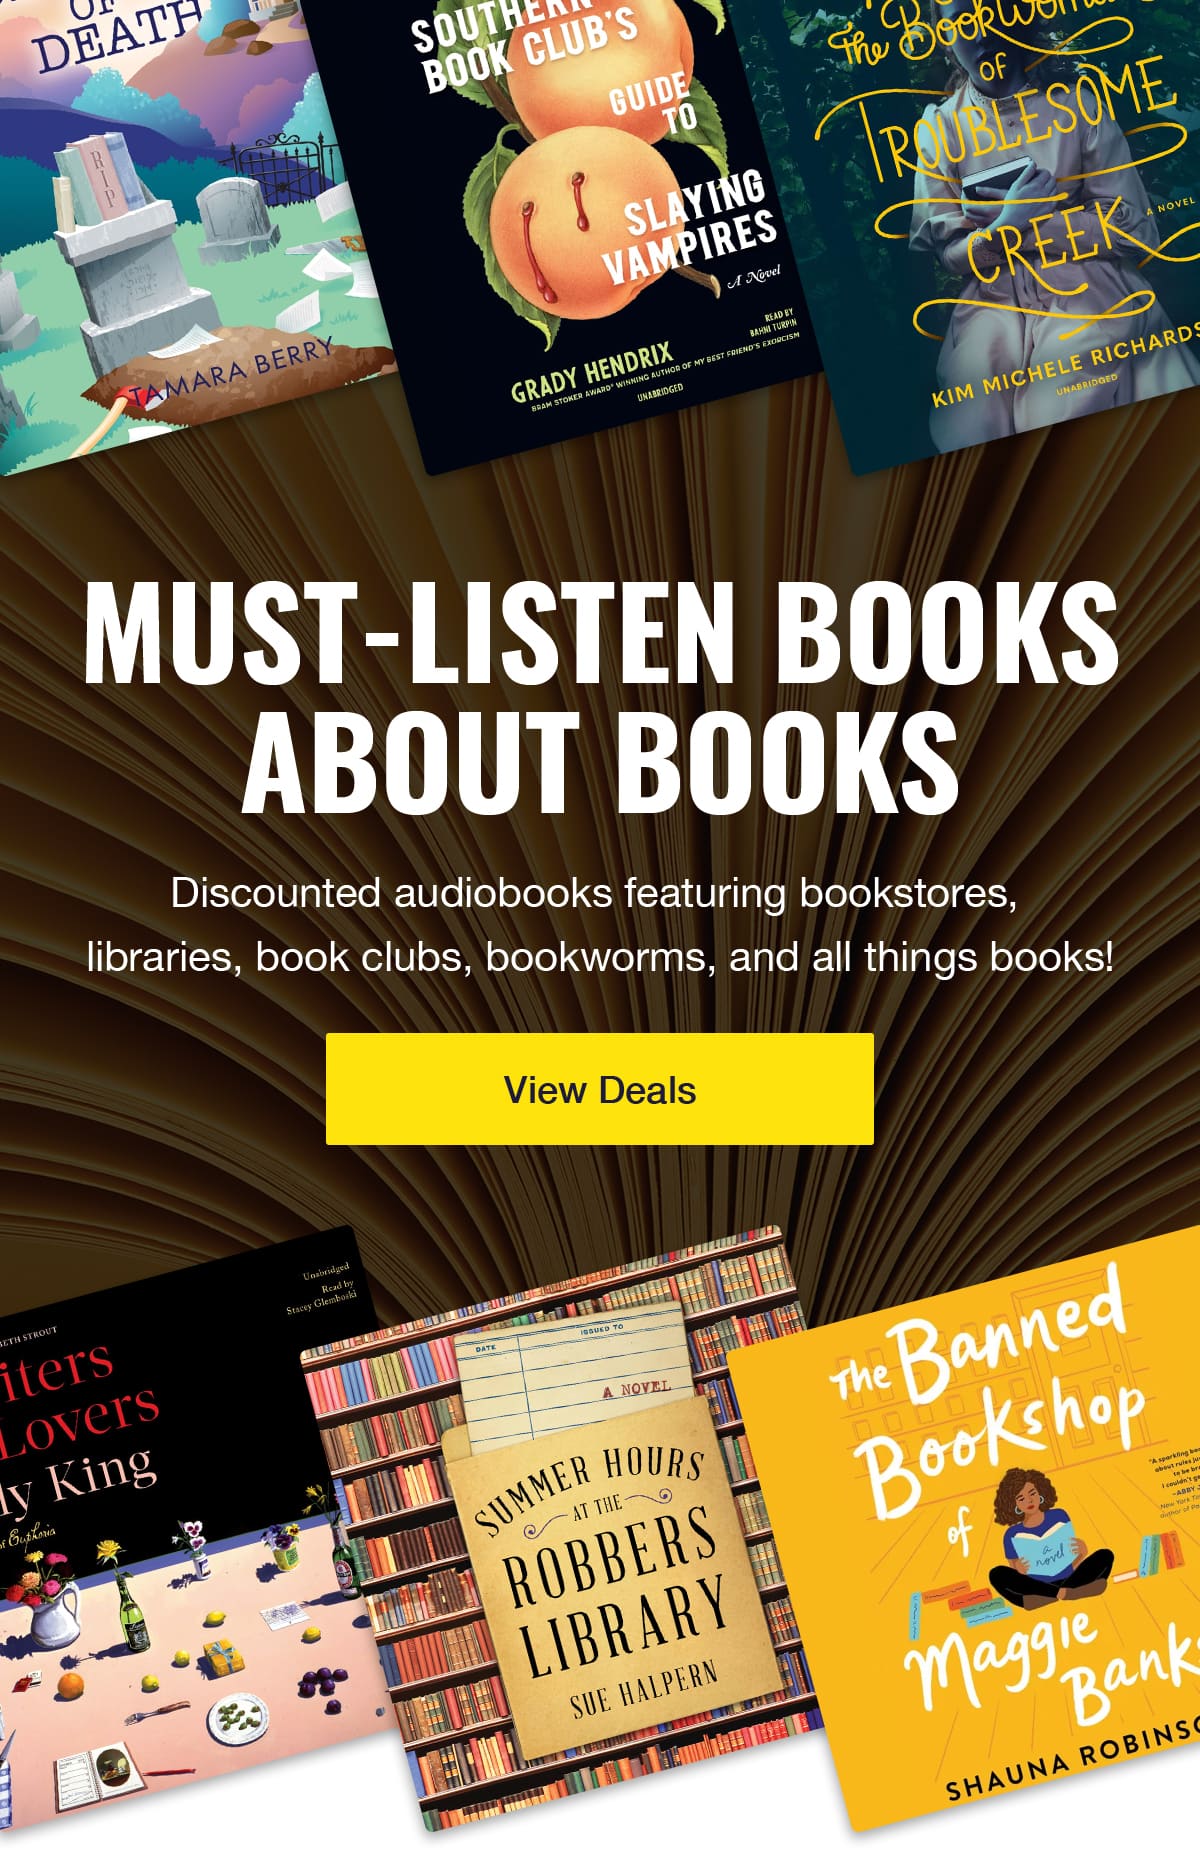 Must-listen books about books